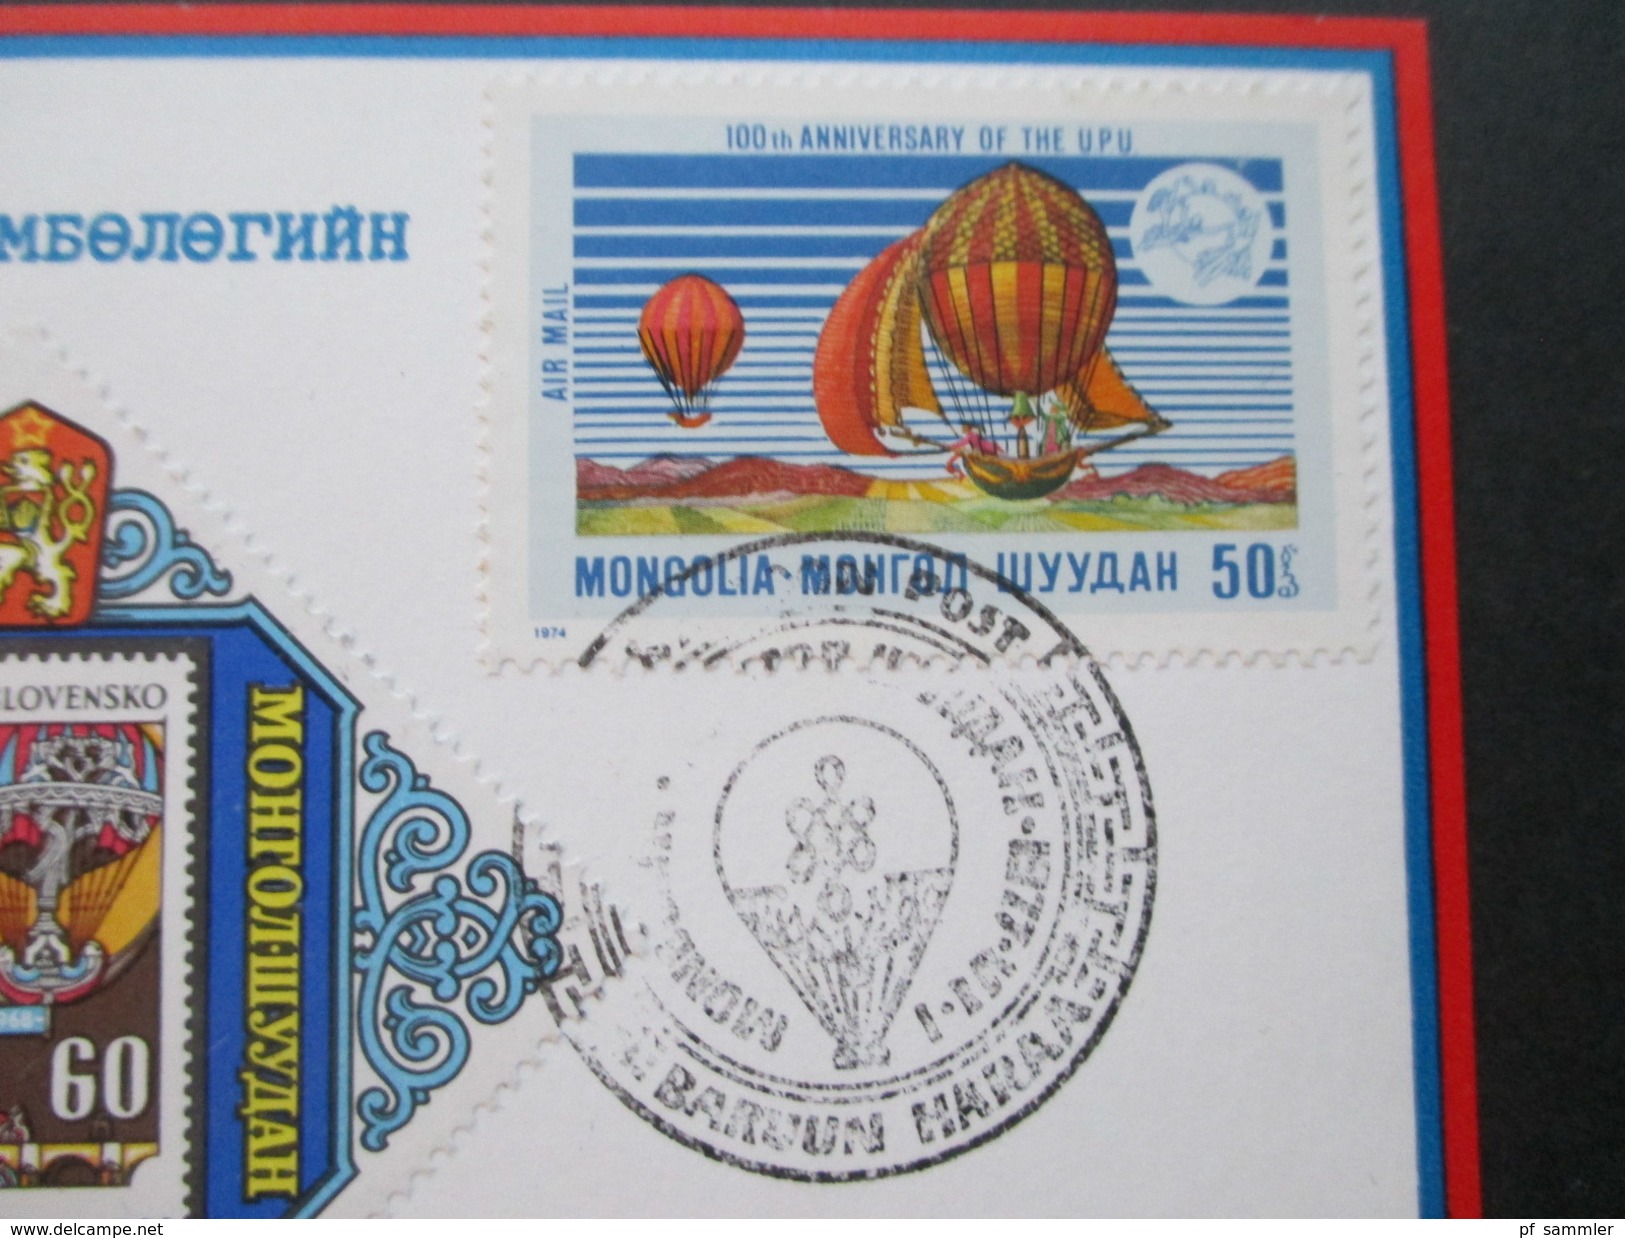 Asien / Mongolei 1977 Ballonpost. UPU. Stille Sonne. Freiballon HB - BEK - Mongolei